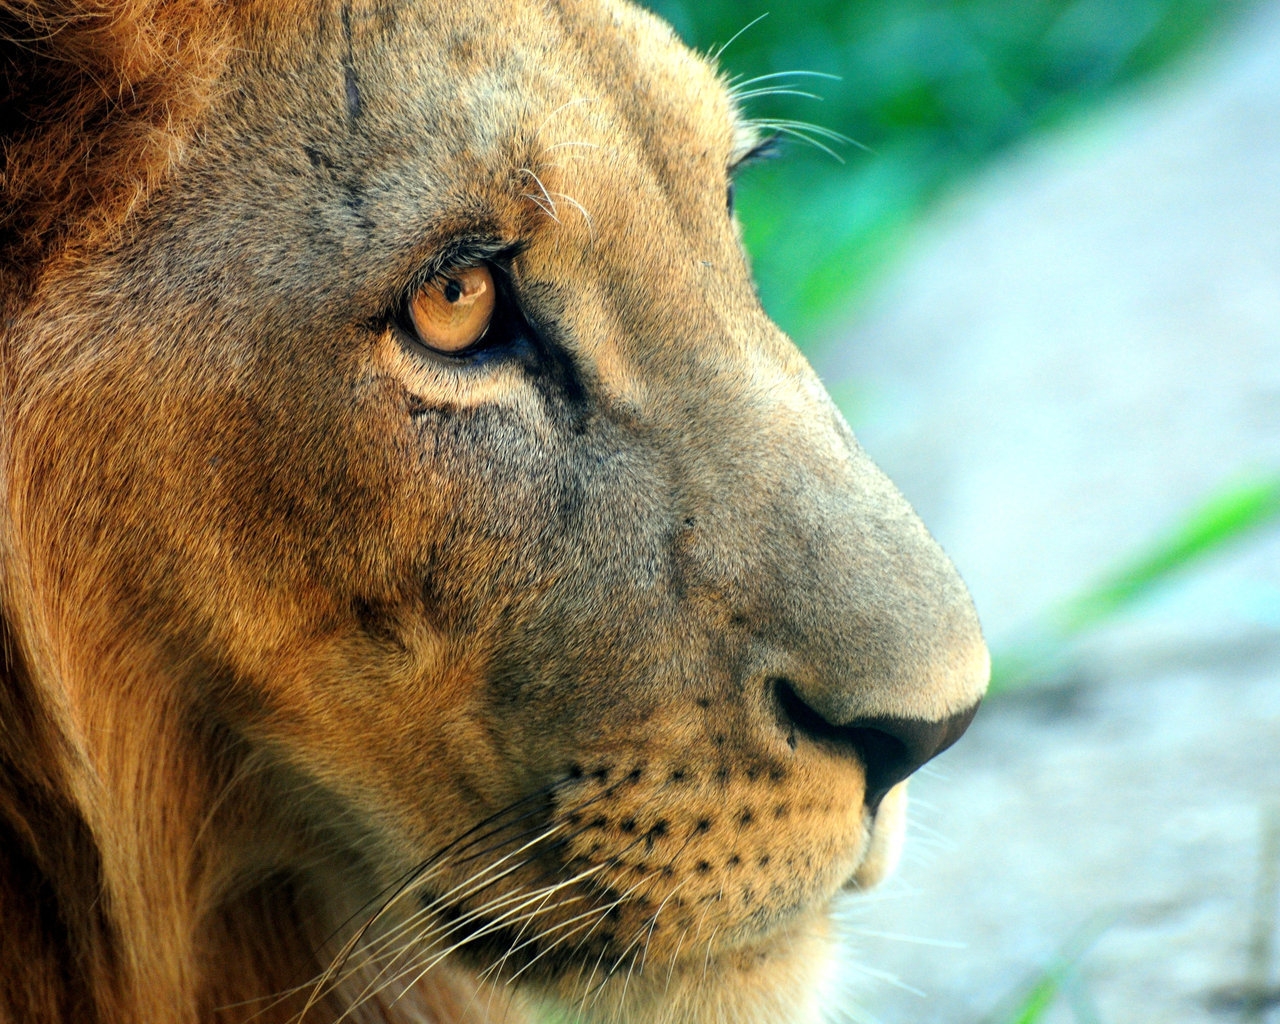 Fierce Lion for 1280 x 1024 resolution